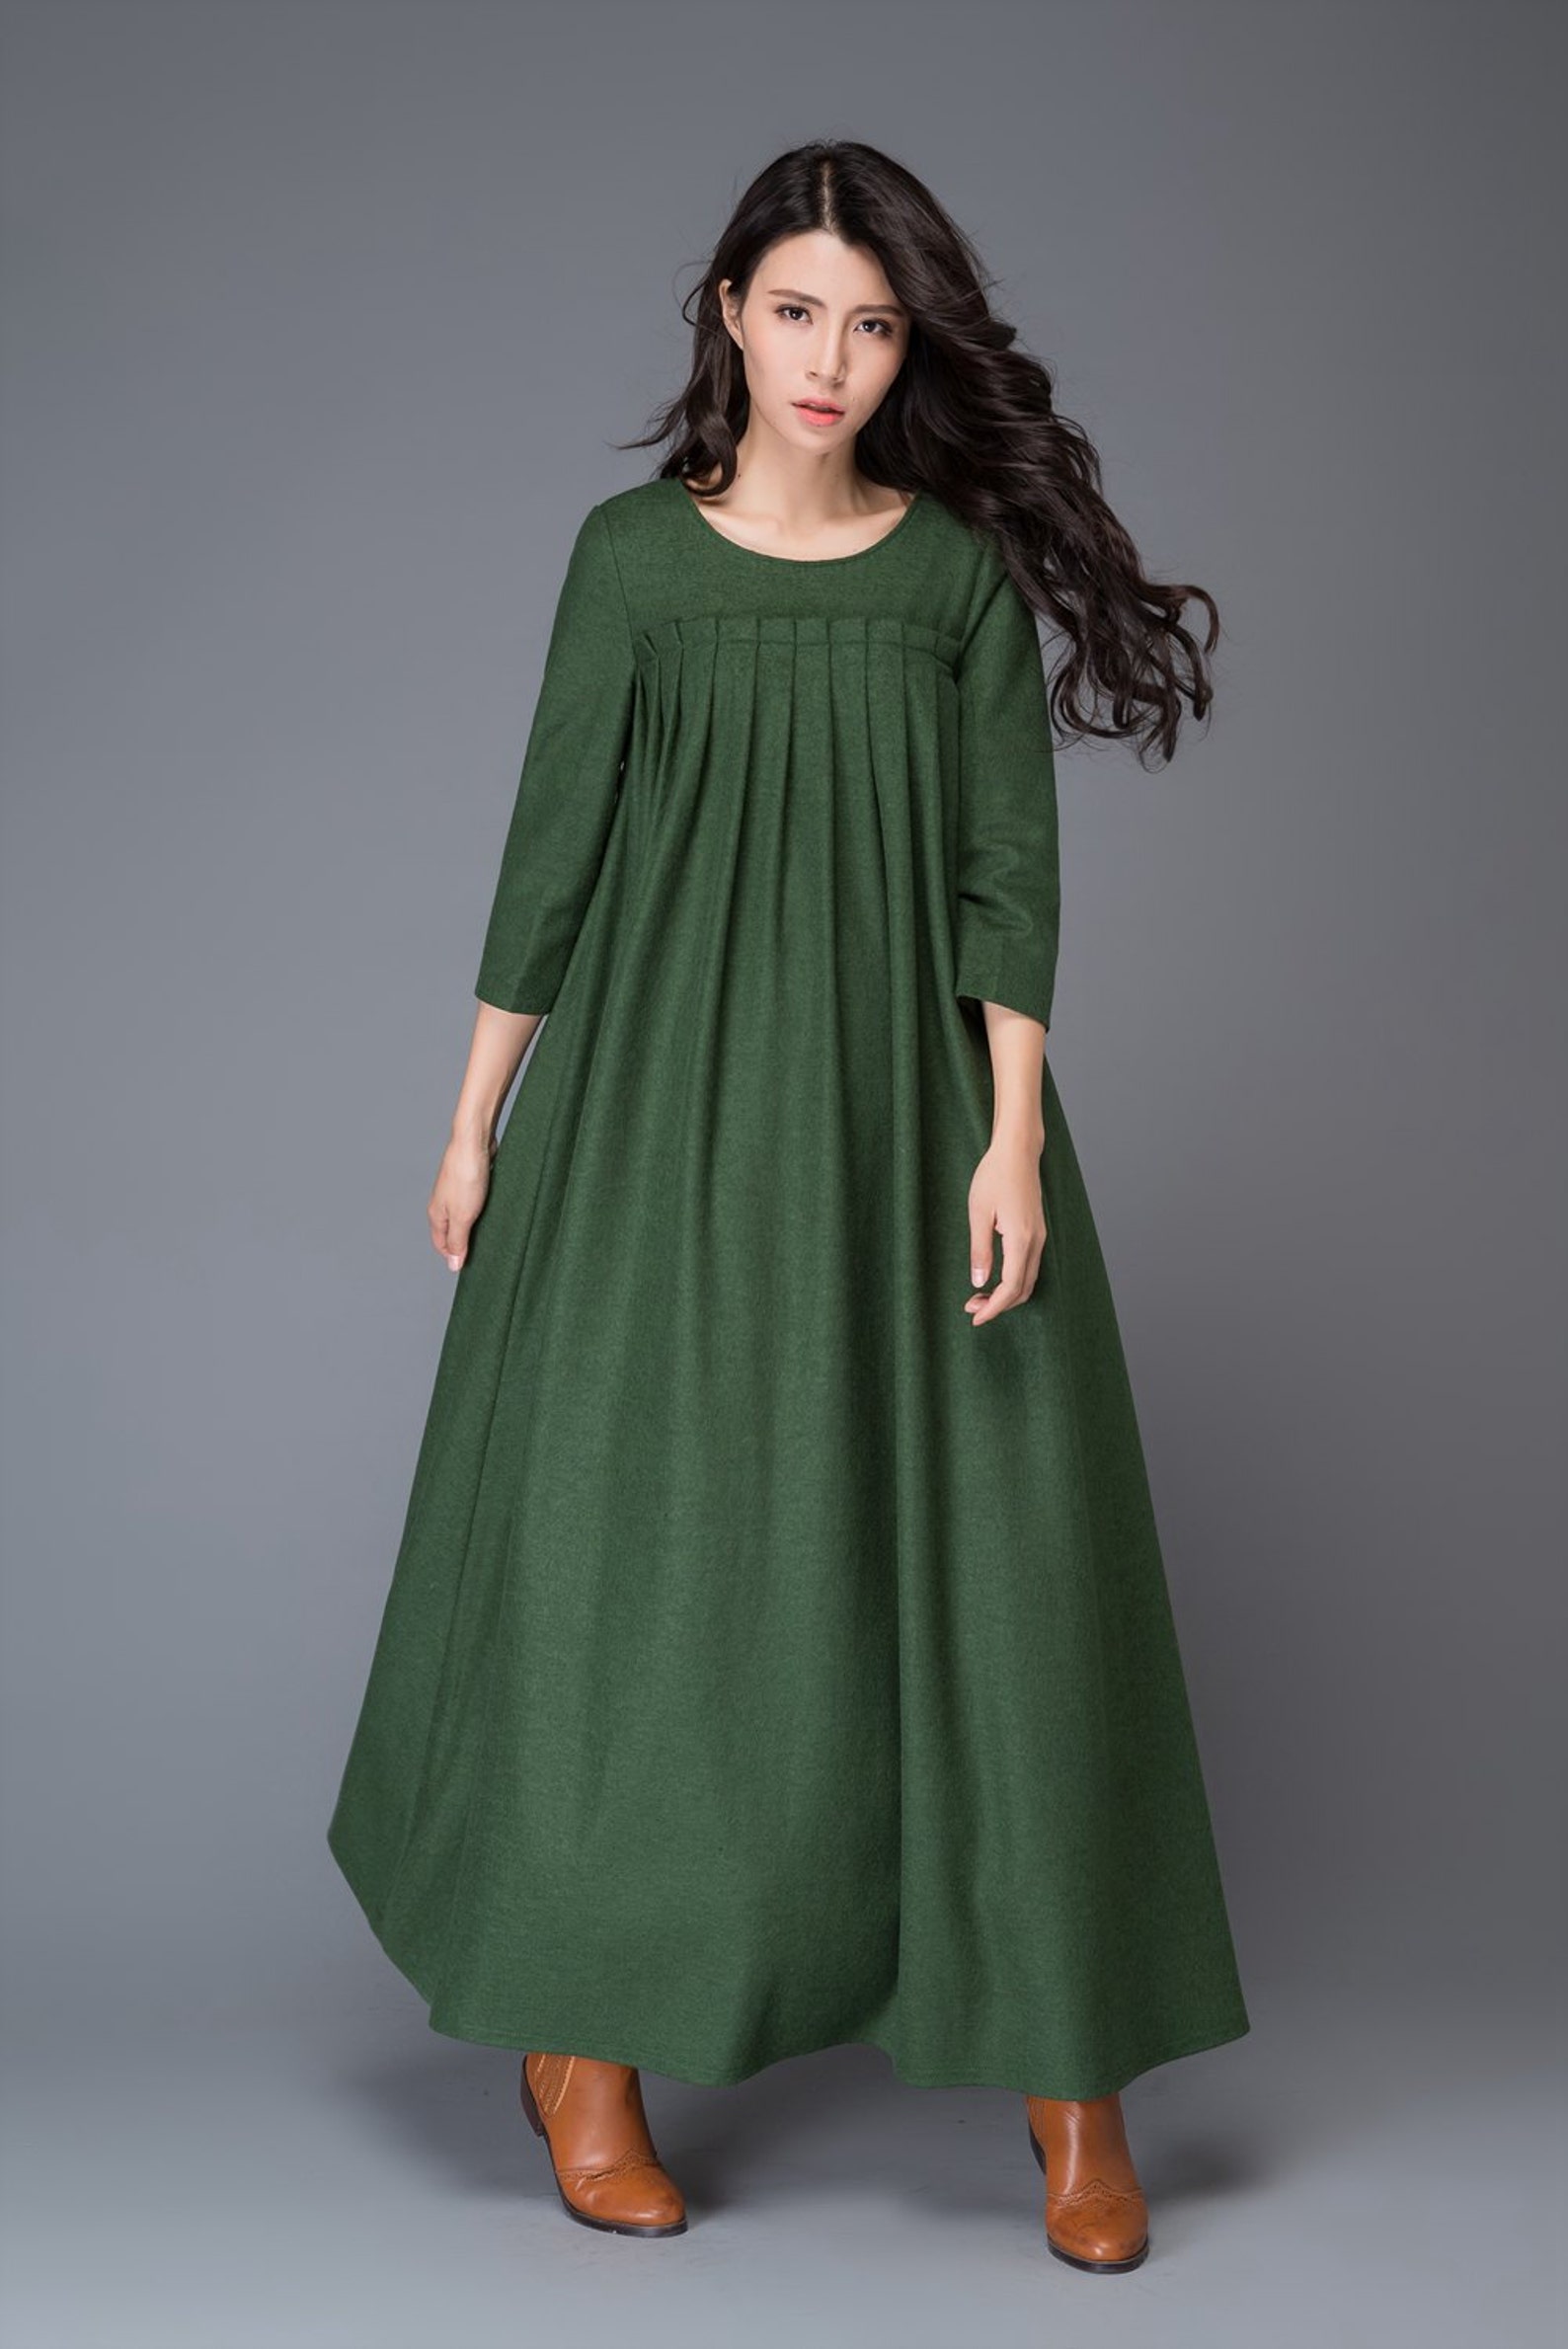 Green Dress Wool Dress Winter Dress Maxi Dress Womens - Etsy